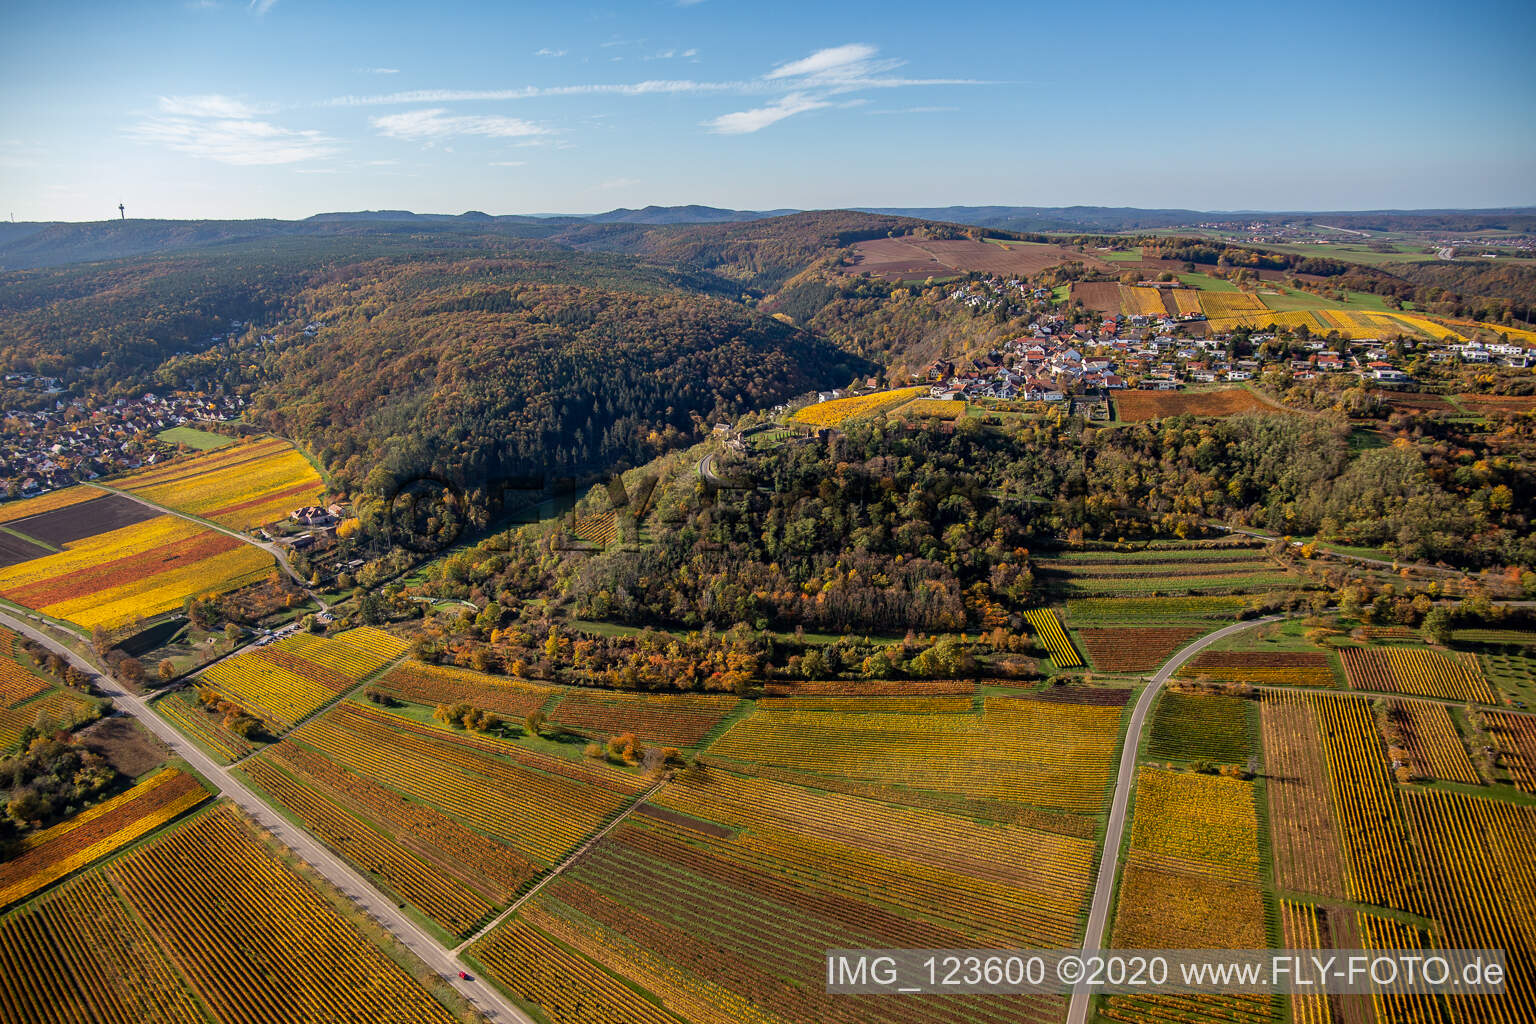 Battenberg in the state Rhineland-Palatinate, Germany